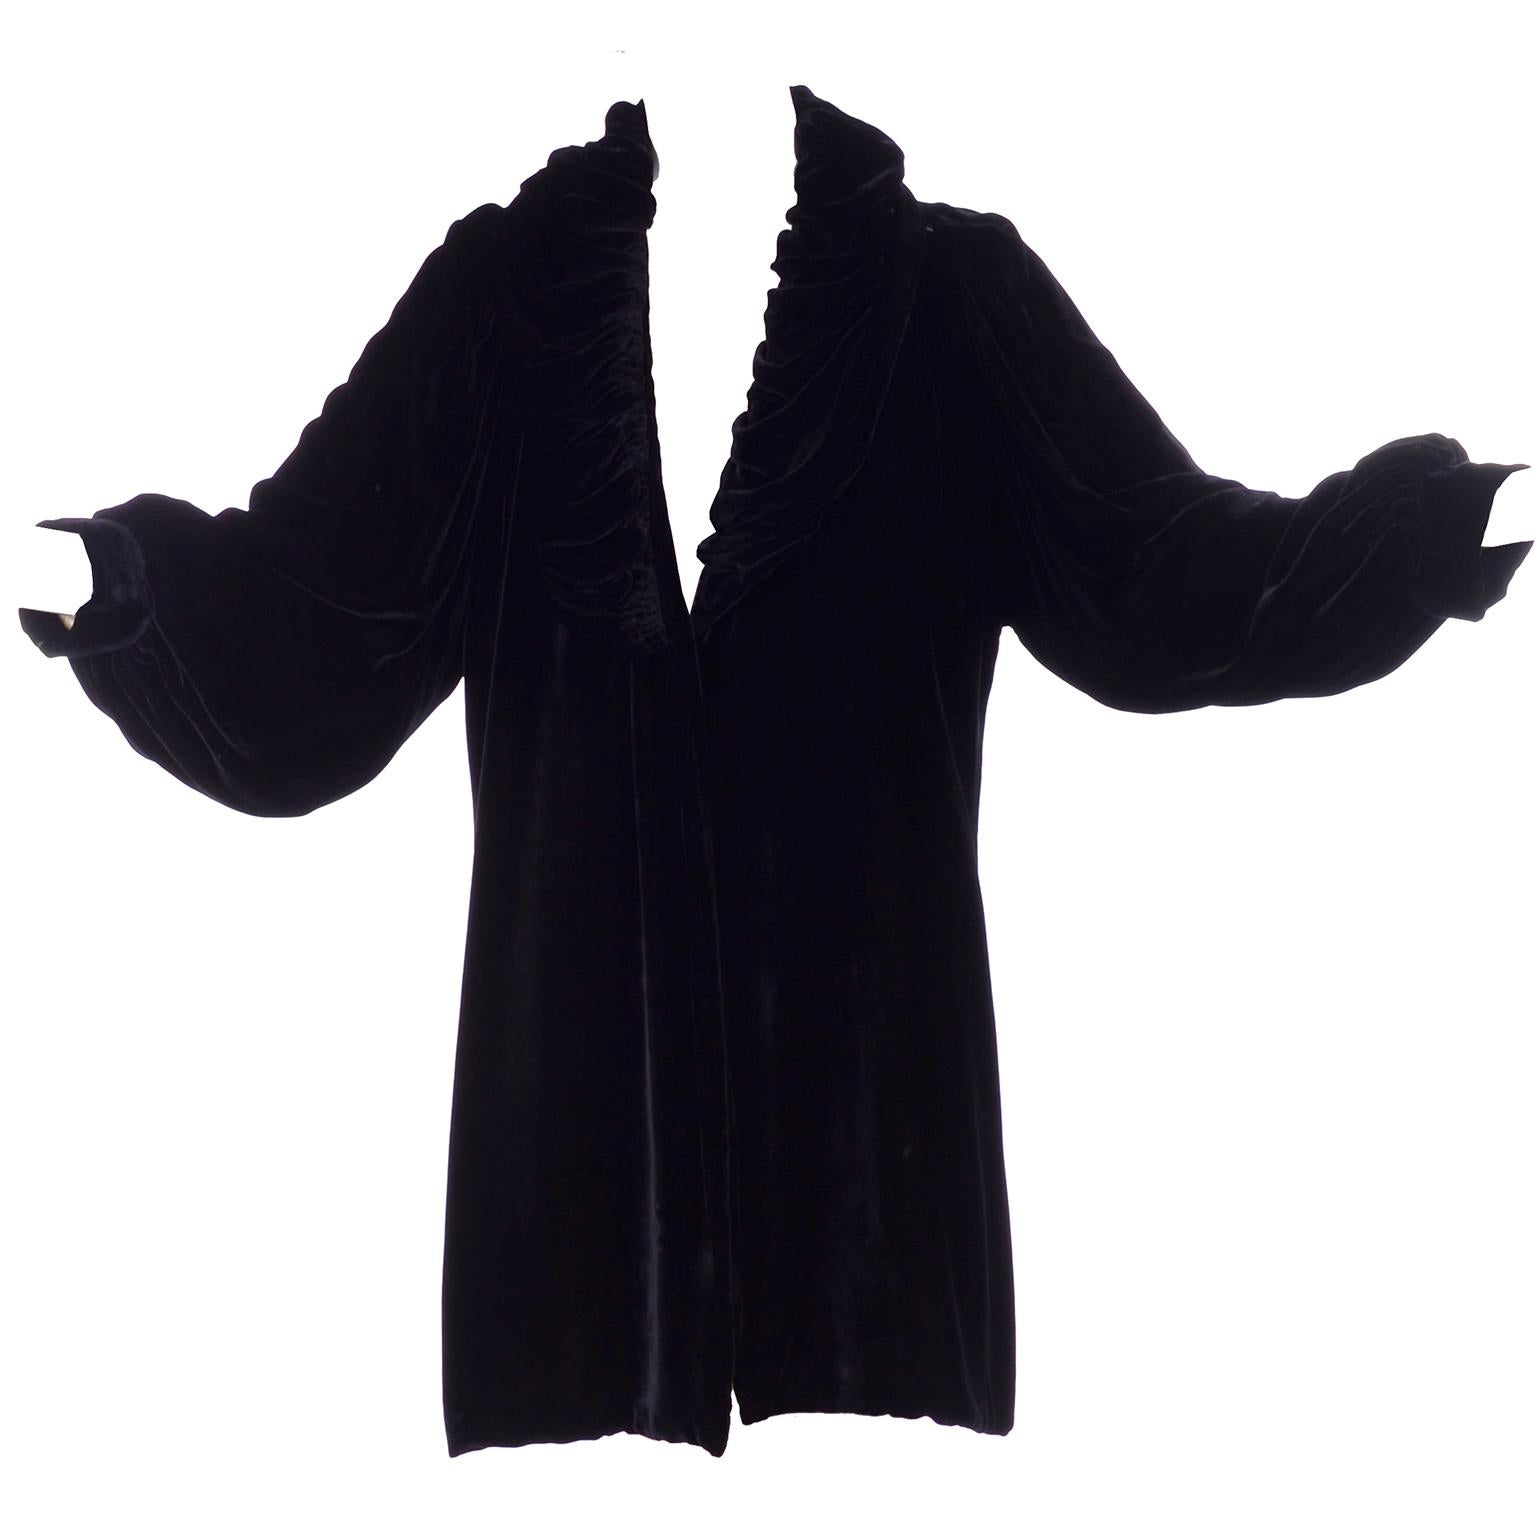 Vintage 1910s Black Velvet Evening Coat W/ Gathered Collar & Puff Sleeves For Sale 1